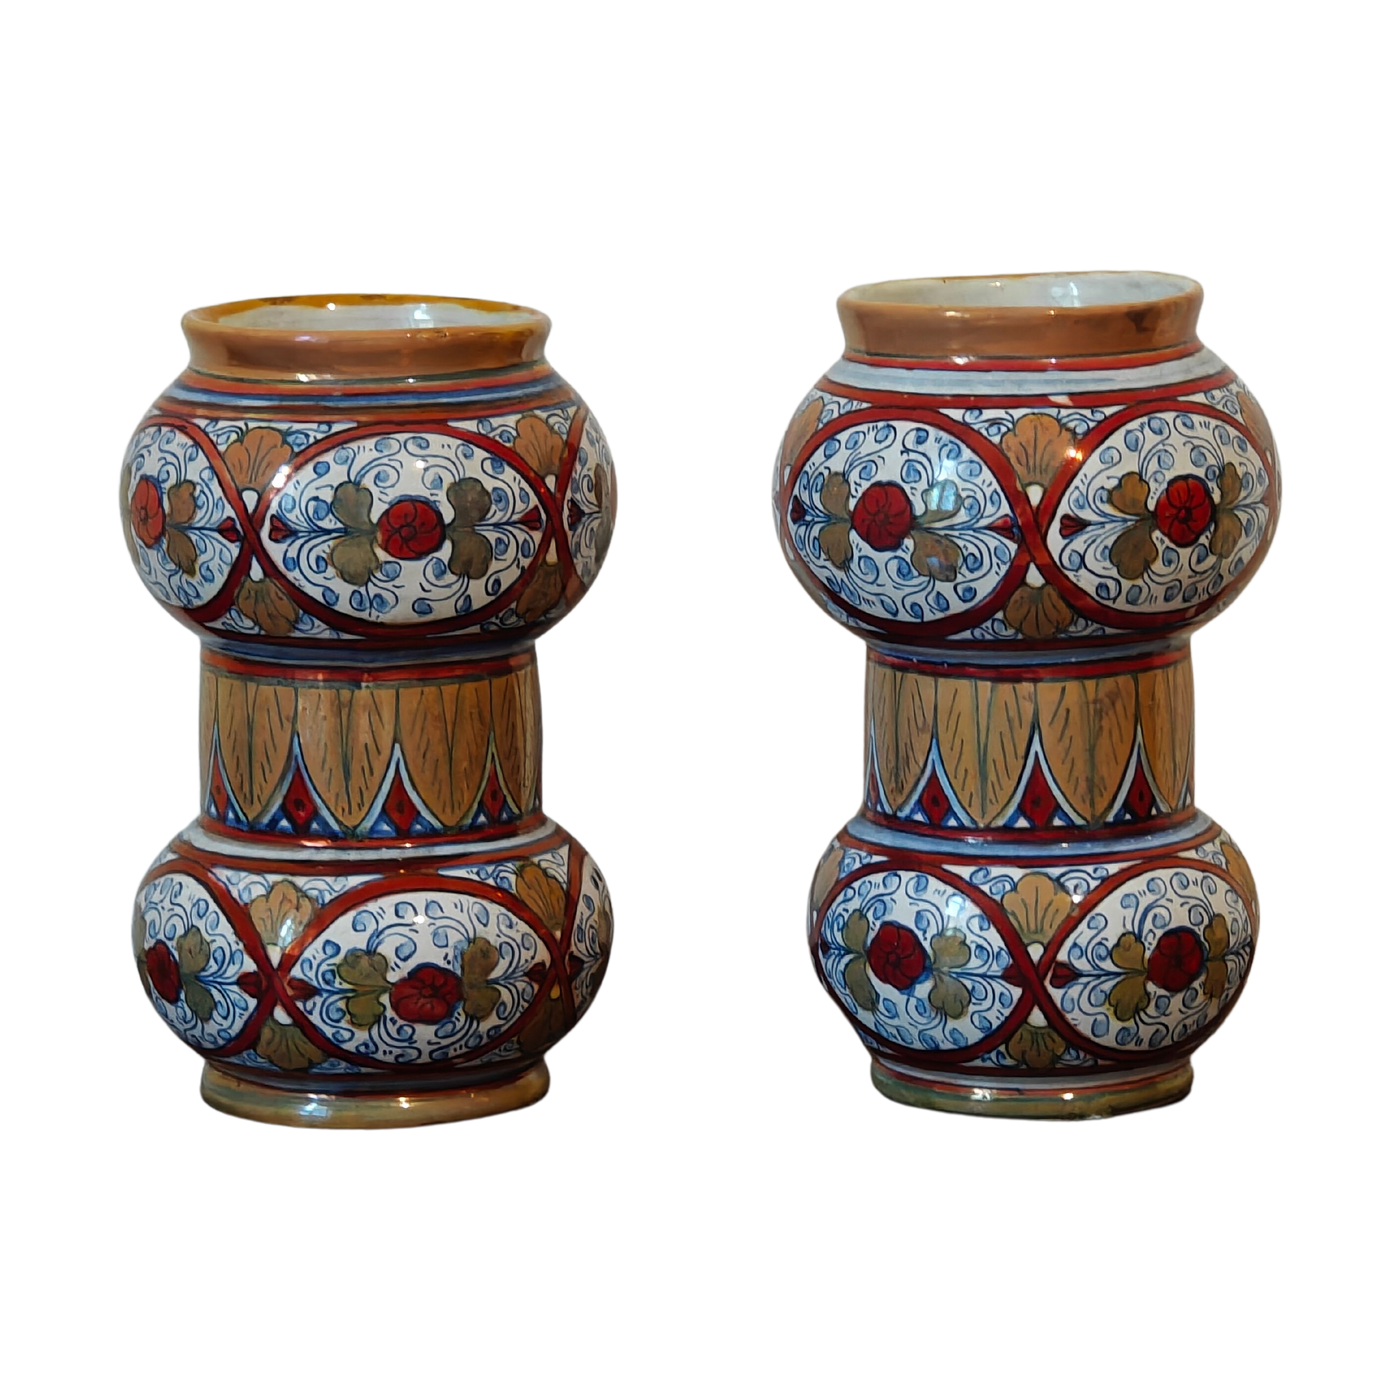 #2886 - pair of vases